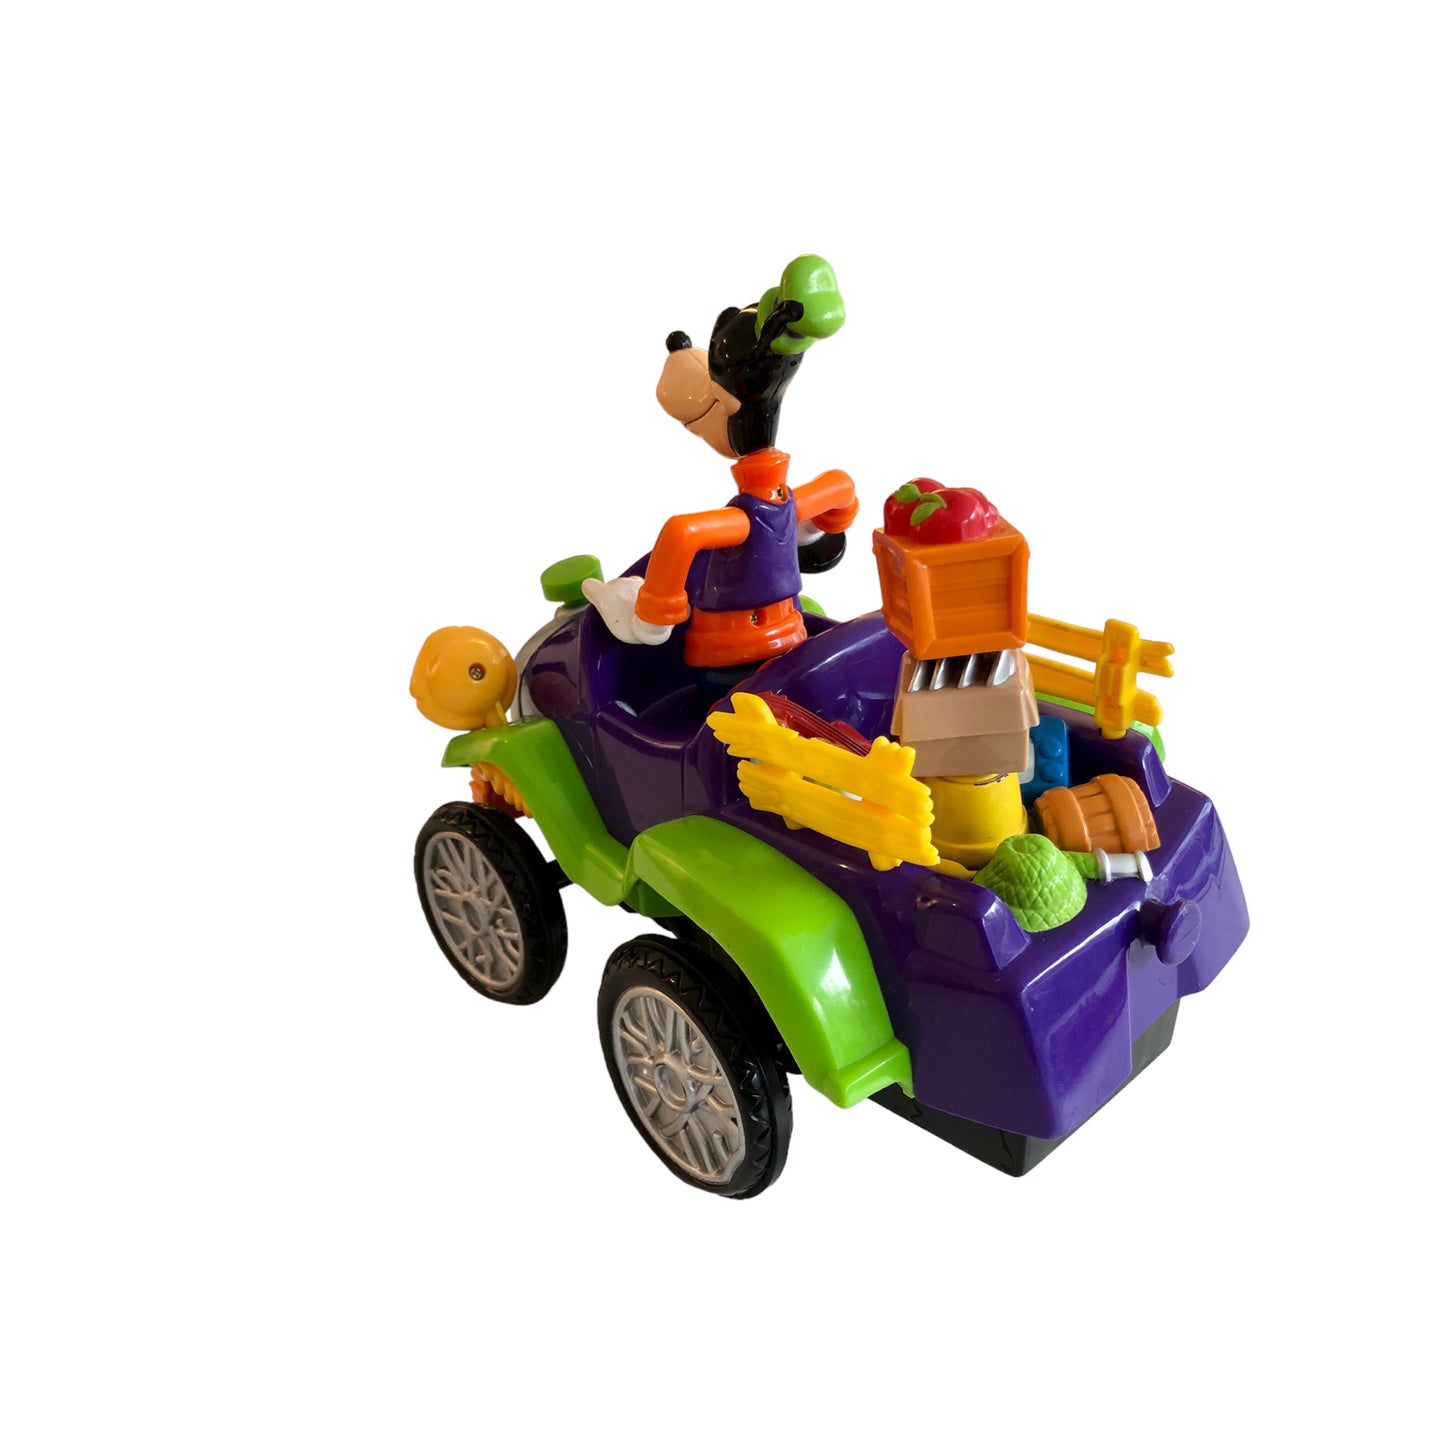 Goofy Jalopy Bumpy Ride Car with Sound and 'Bumpy' Vibration